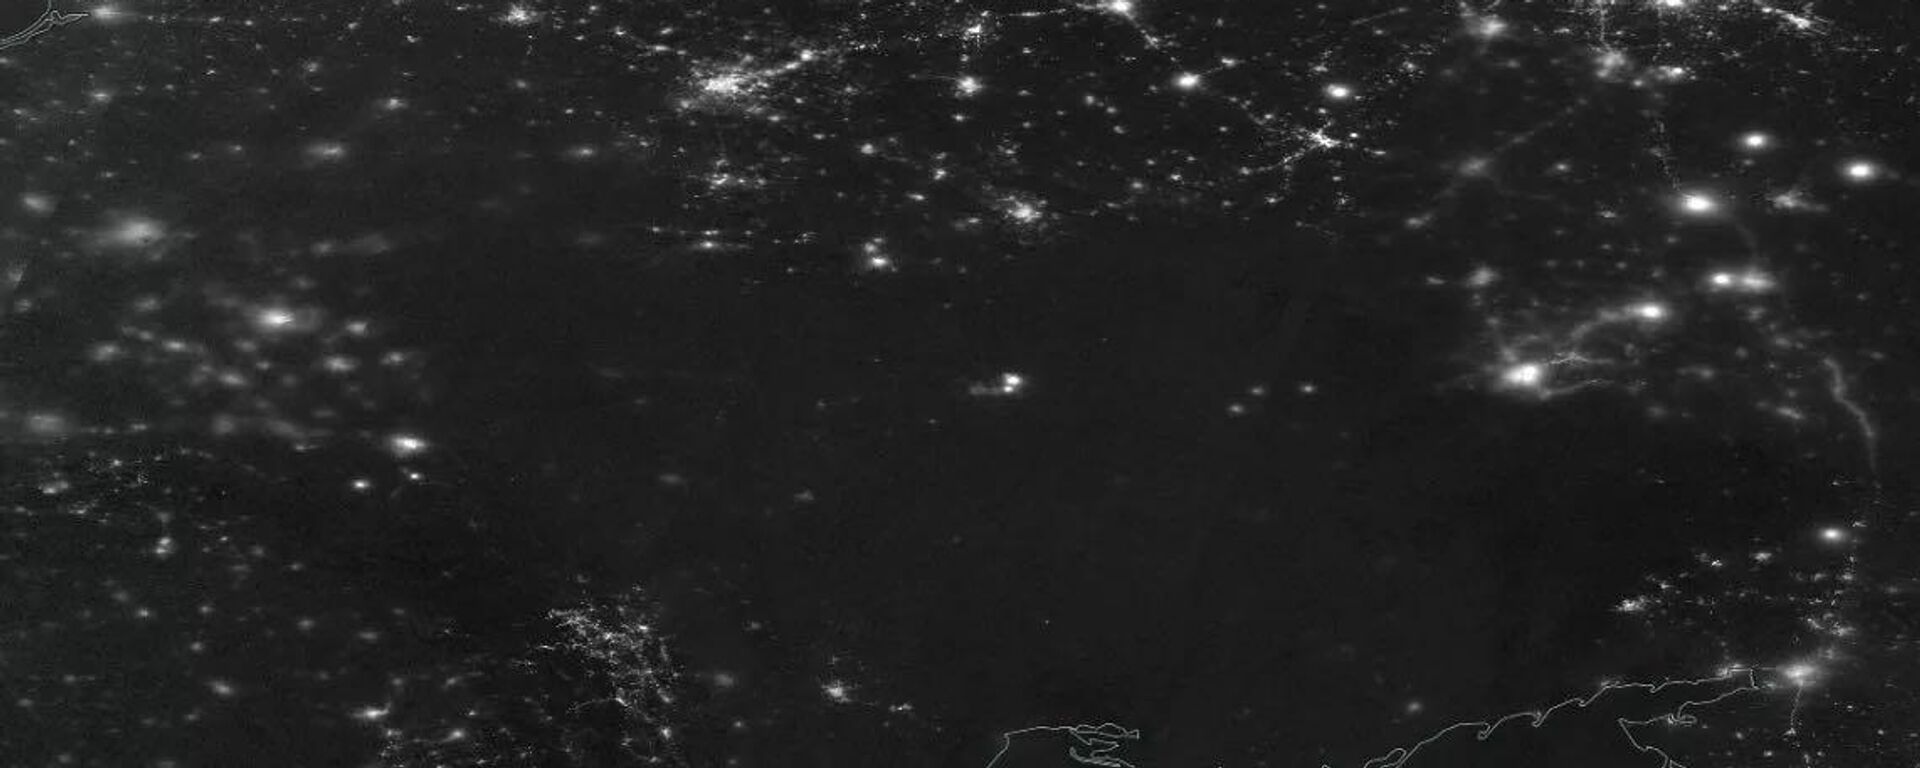 NASA展示乌克兰陷入黑暗的太空照片 - 俄罗斯卫星通讯社, 1920, 26.11.2022